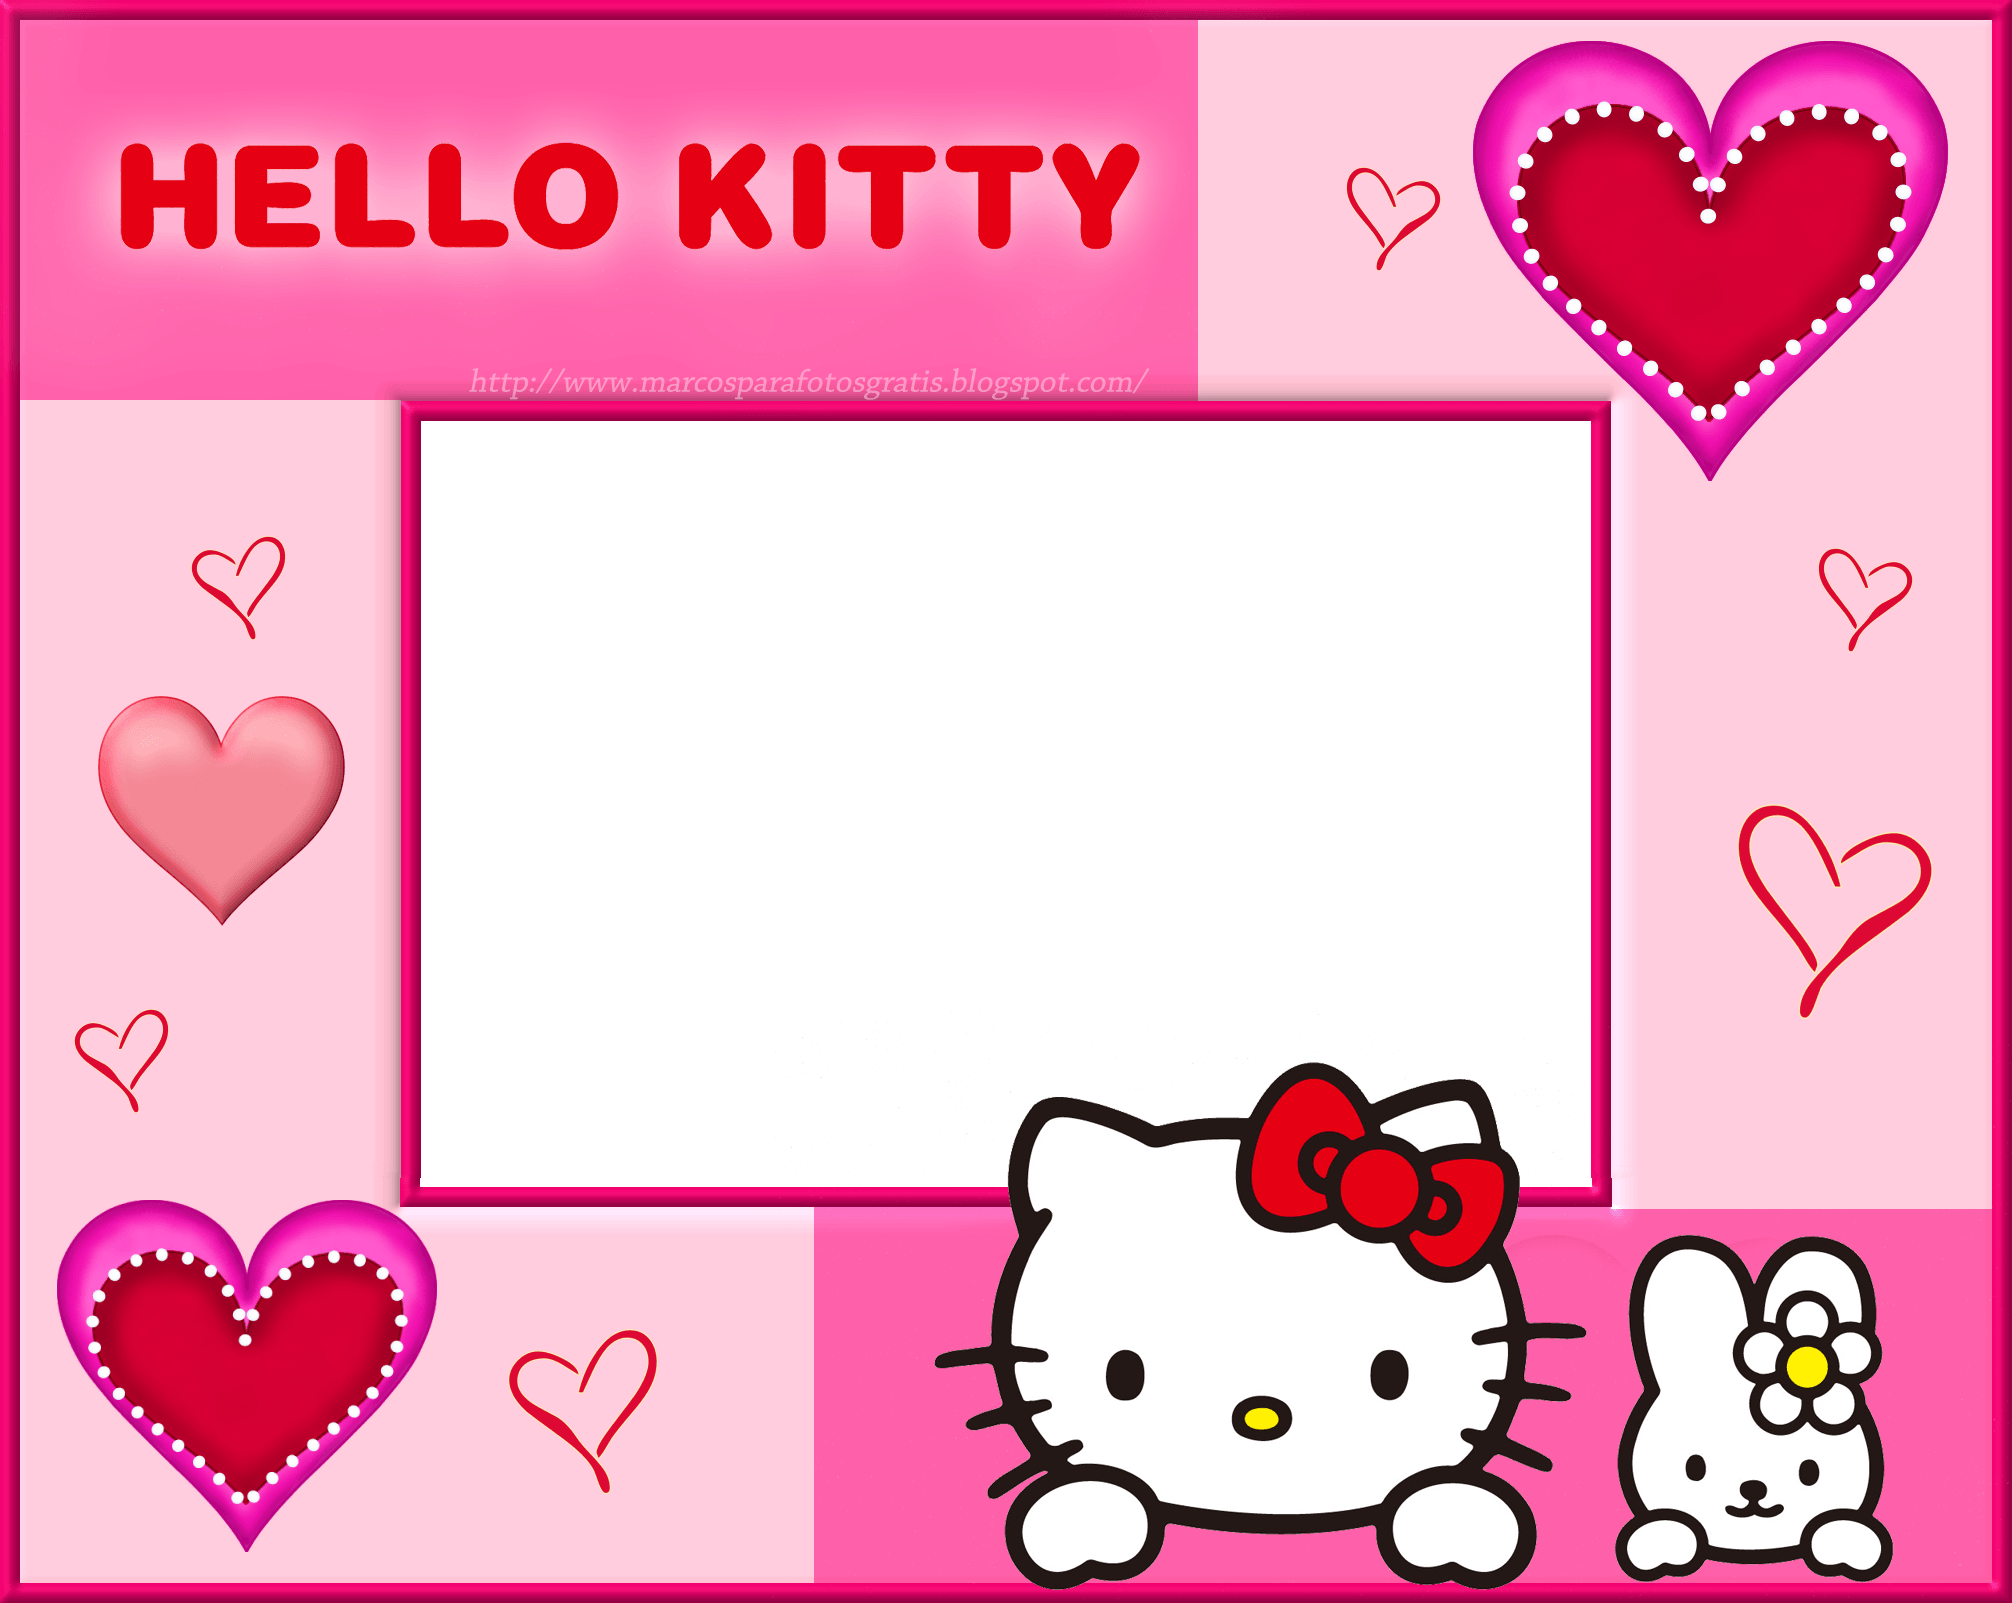 HD Hello Kitty Image Wallpaper Wallpaper. High Definition